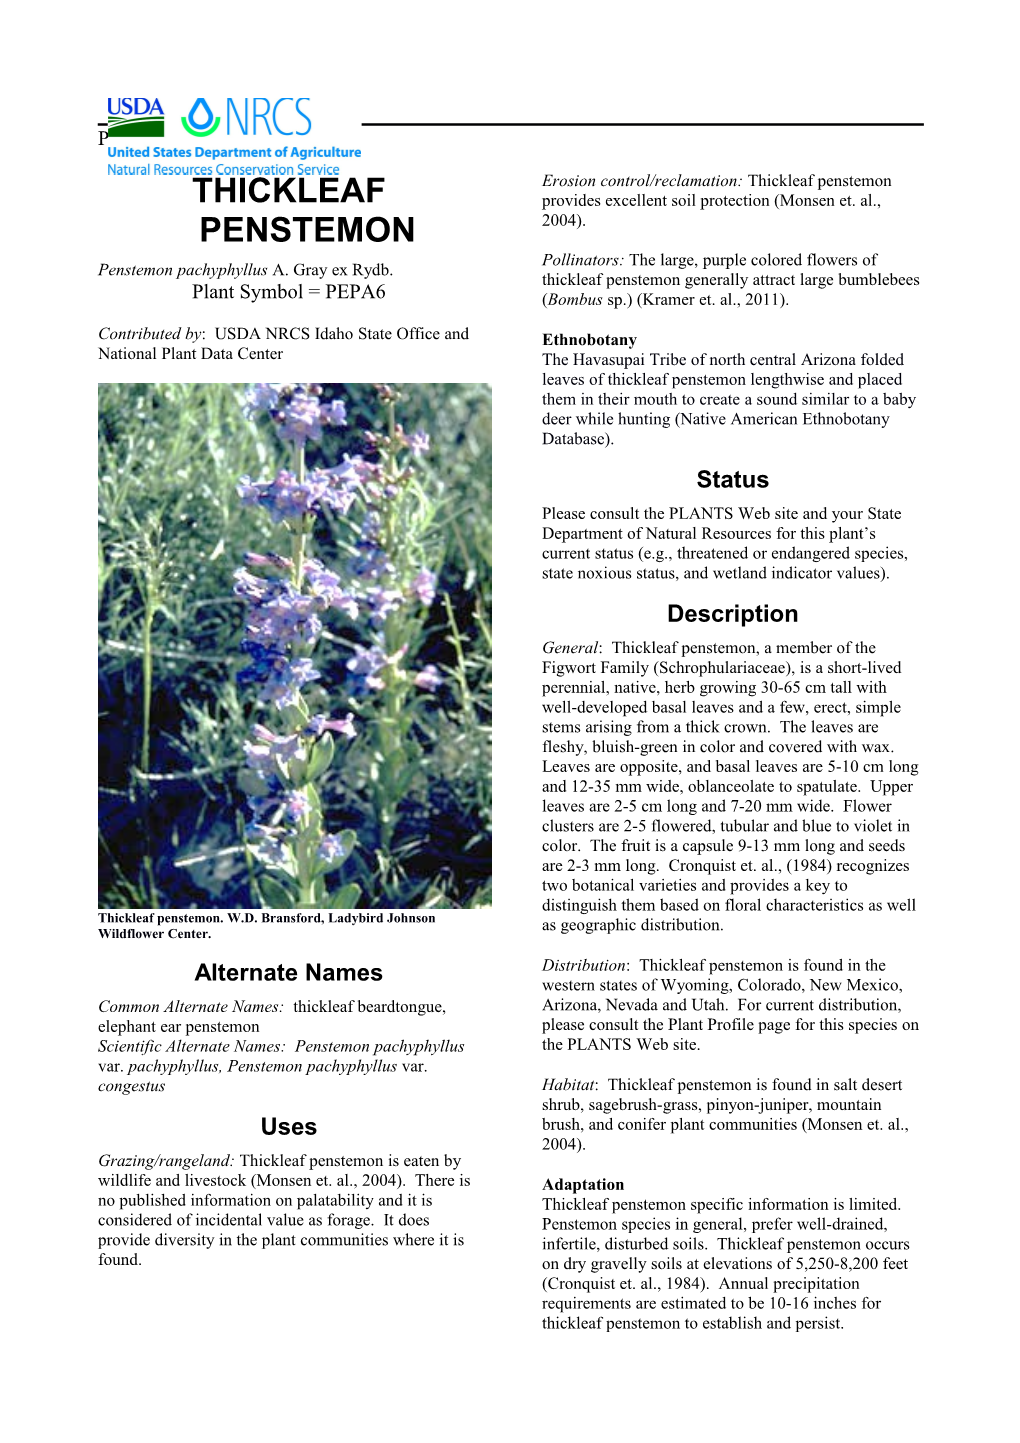 Plant Guide for Thickleaf Penstemon (Penstemon Pachyphyllus)